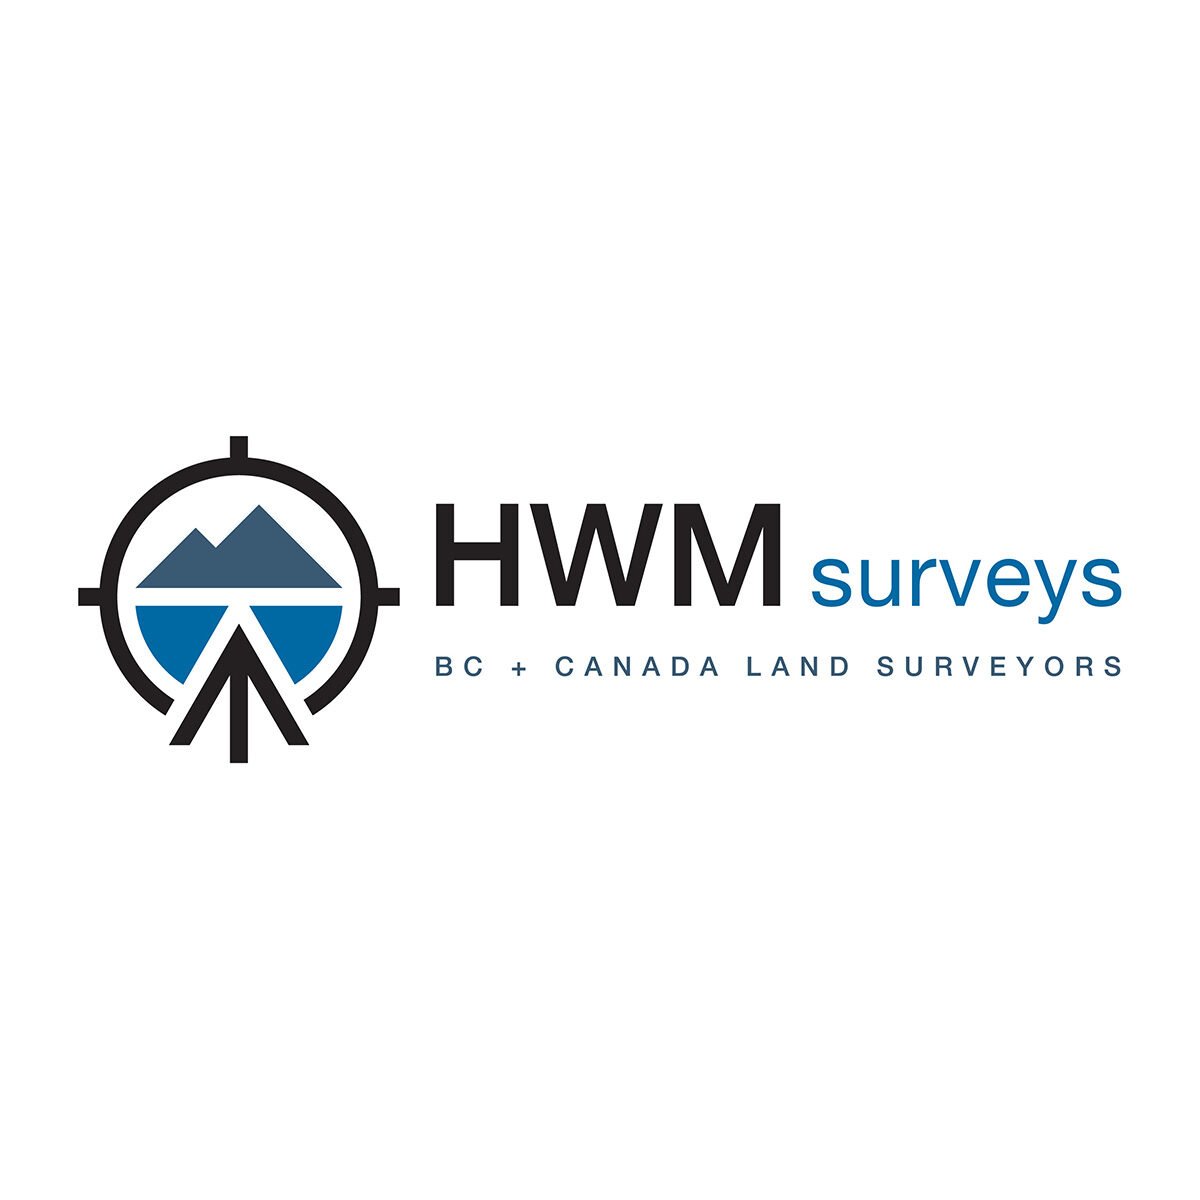 lindsay-mcghee-designs-hwm-surveys-logo-horz-1200